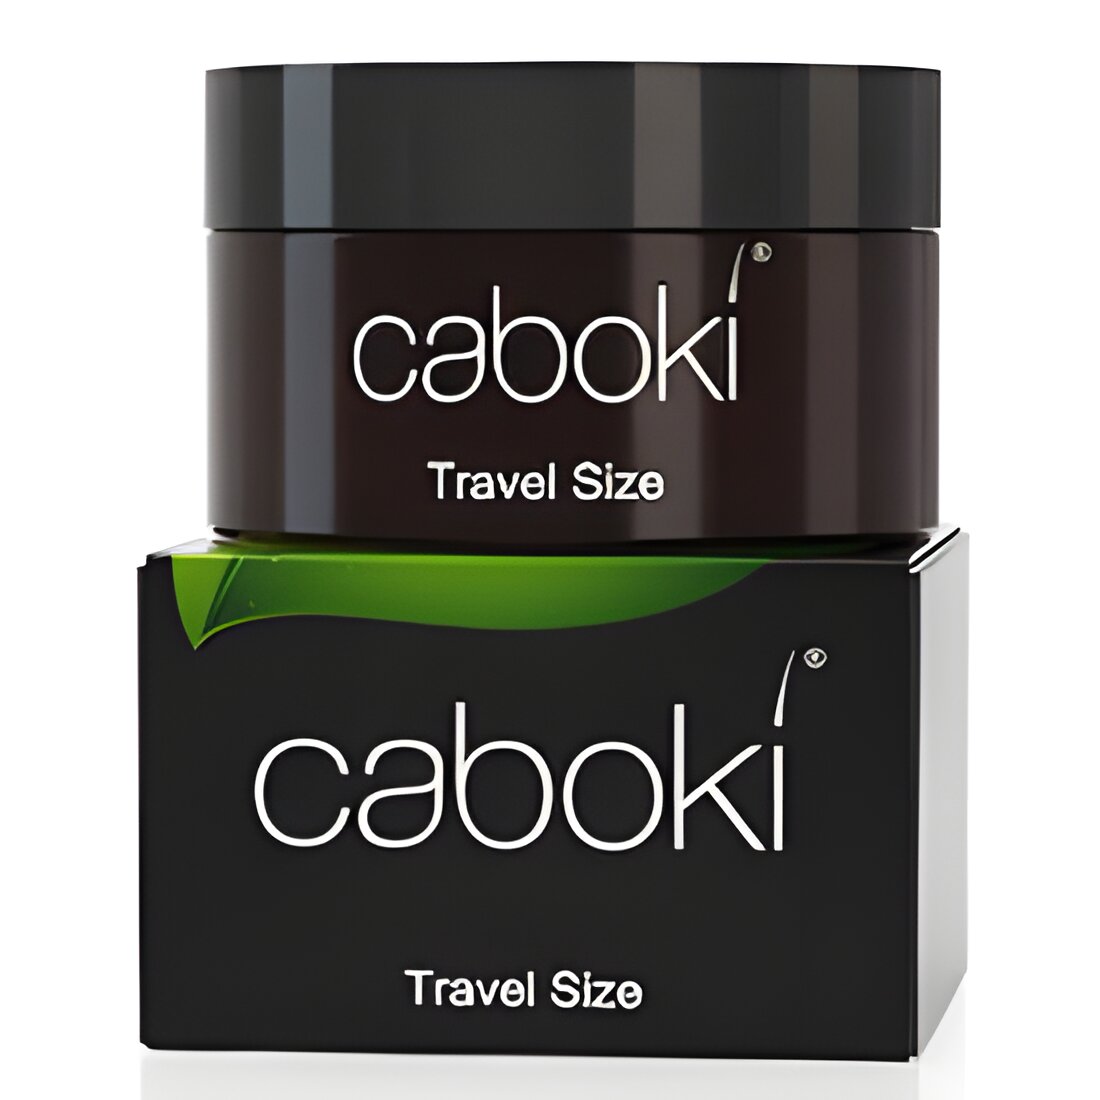 Free Caboki Hair Treatment Samples